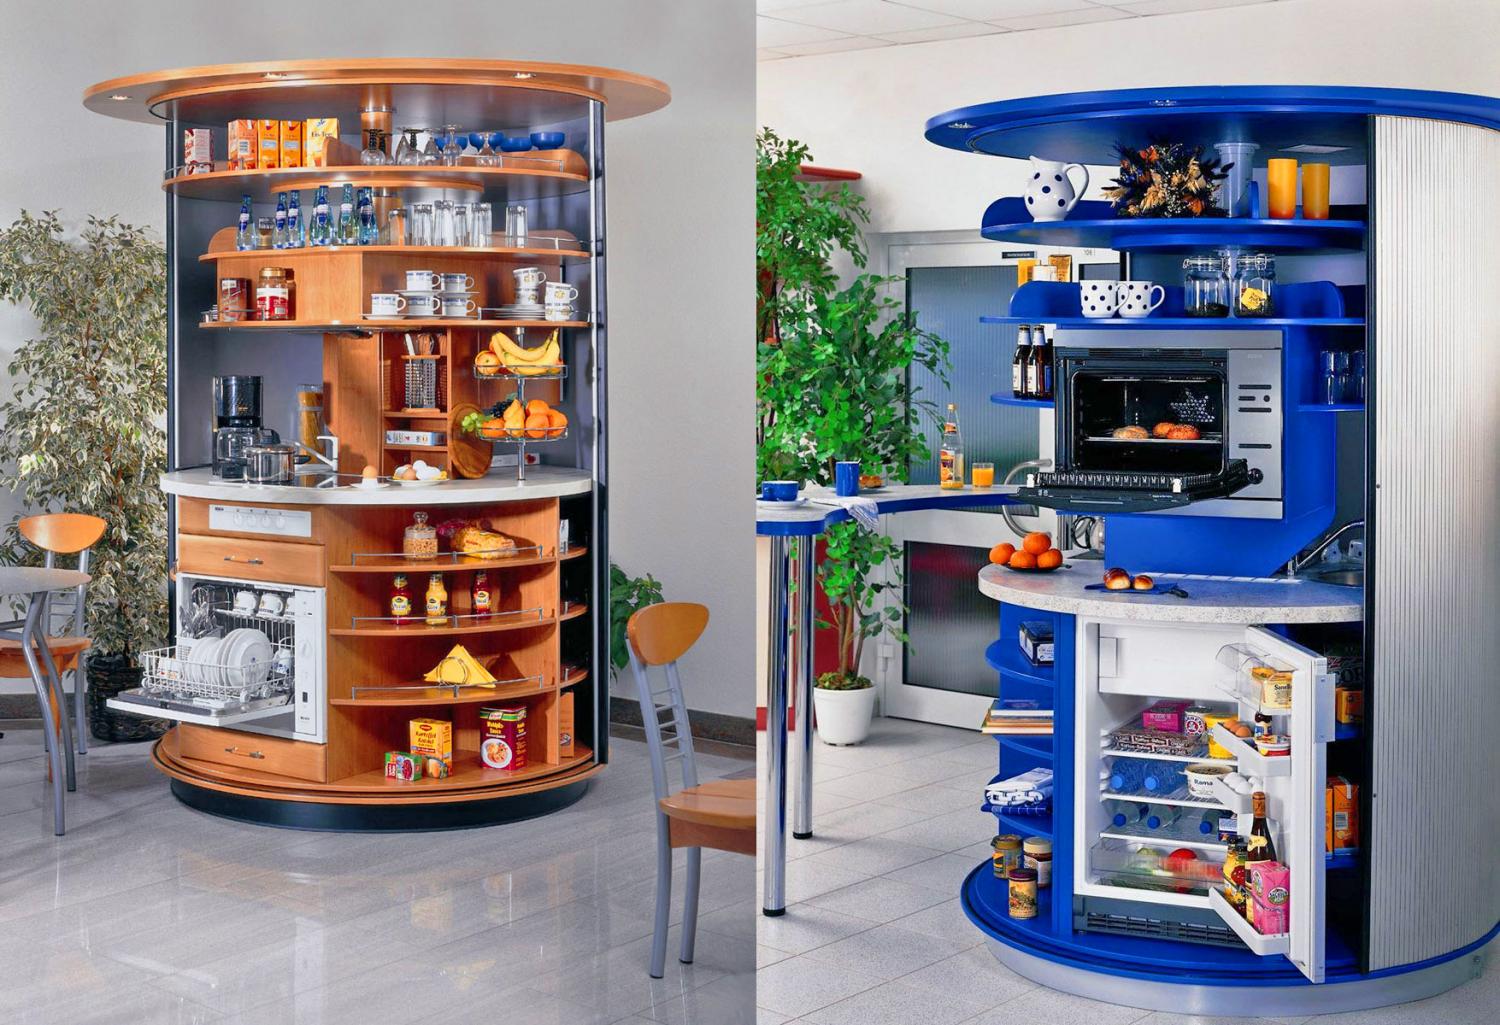 Rotating Circle Kitchen - Futuristic minimal design space-saving kitchen that spins